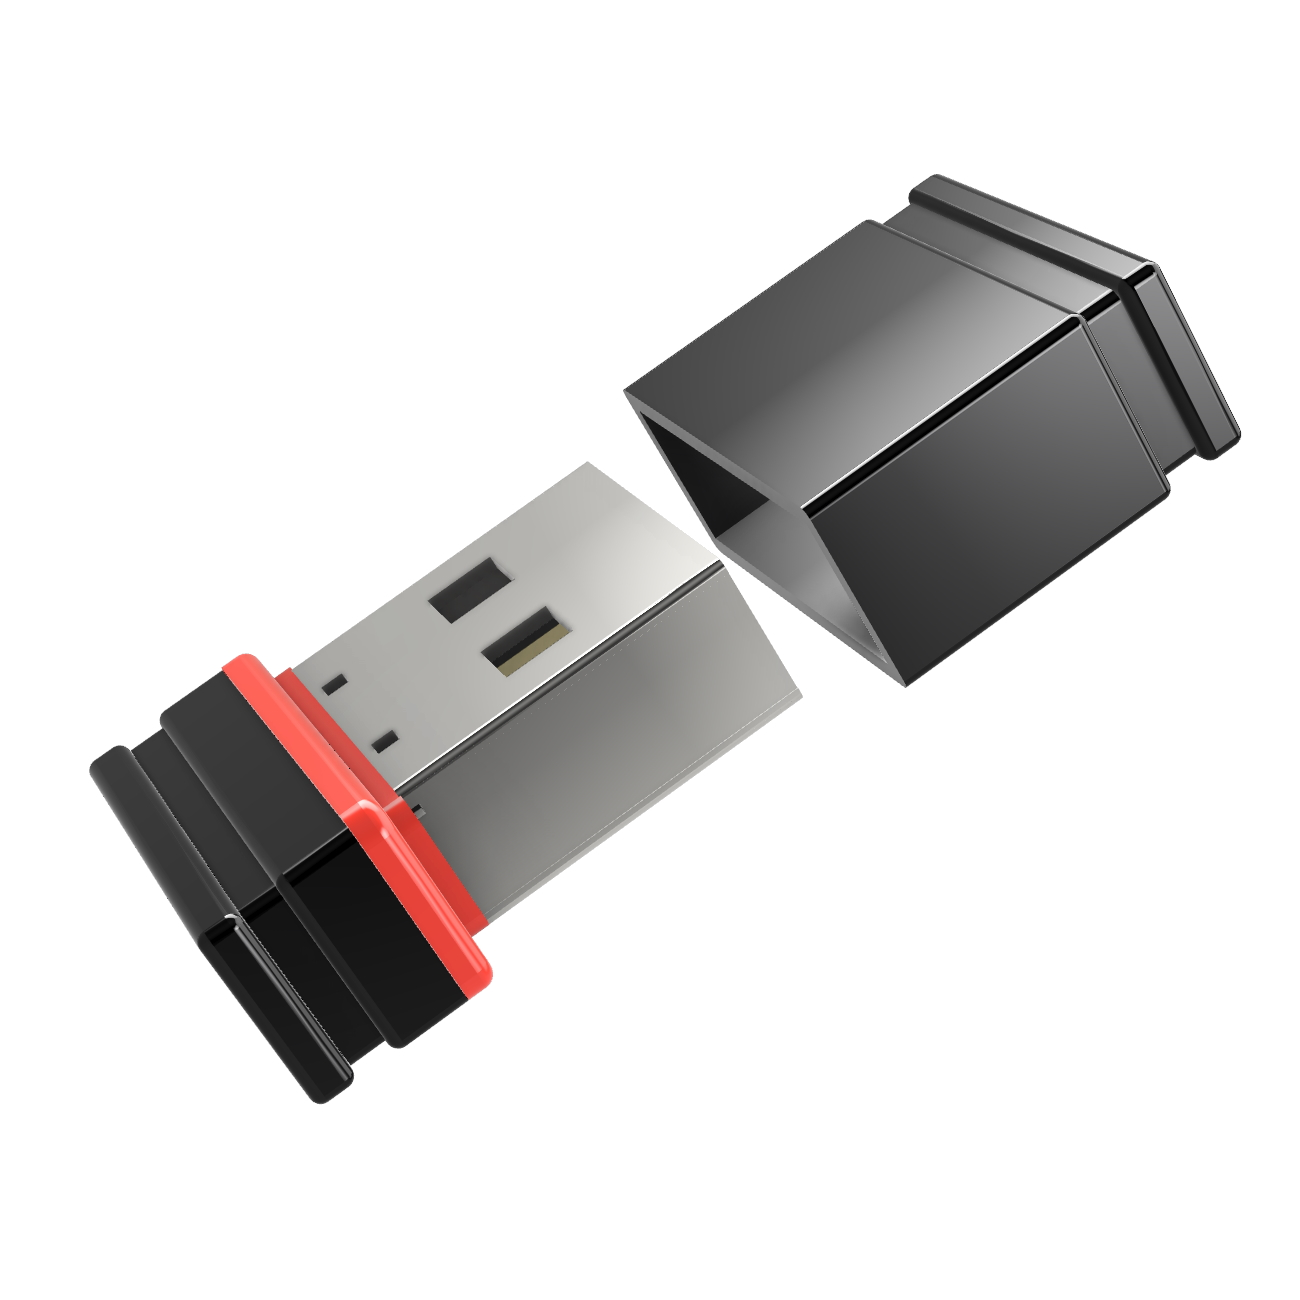 GB) USB-Stick GERMANY USB P1 ®ULTRA Mini (Schwarz/Rot, 1